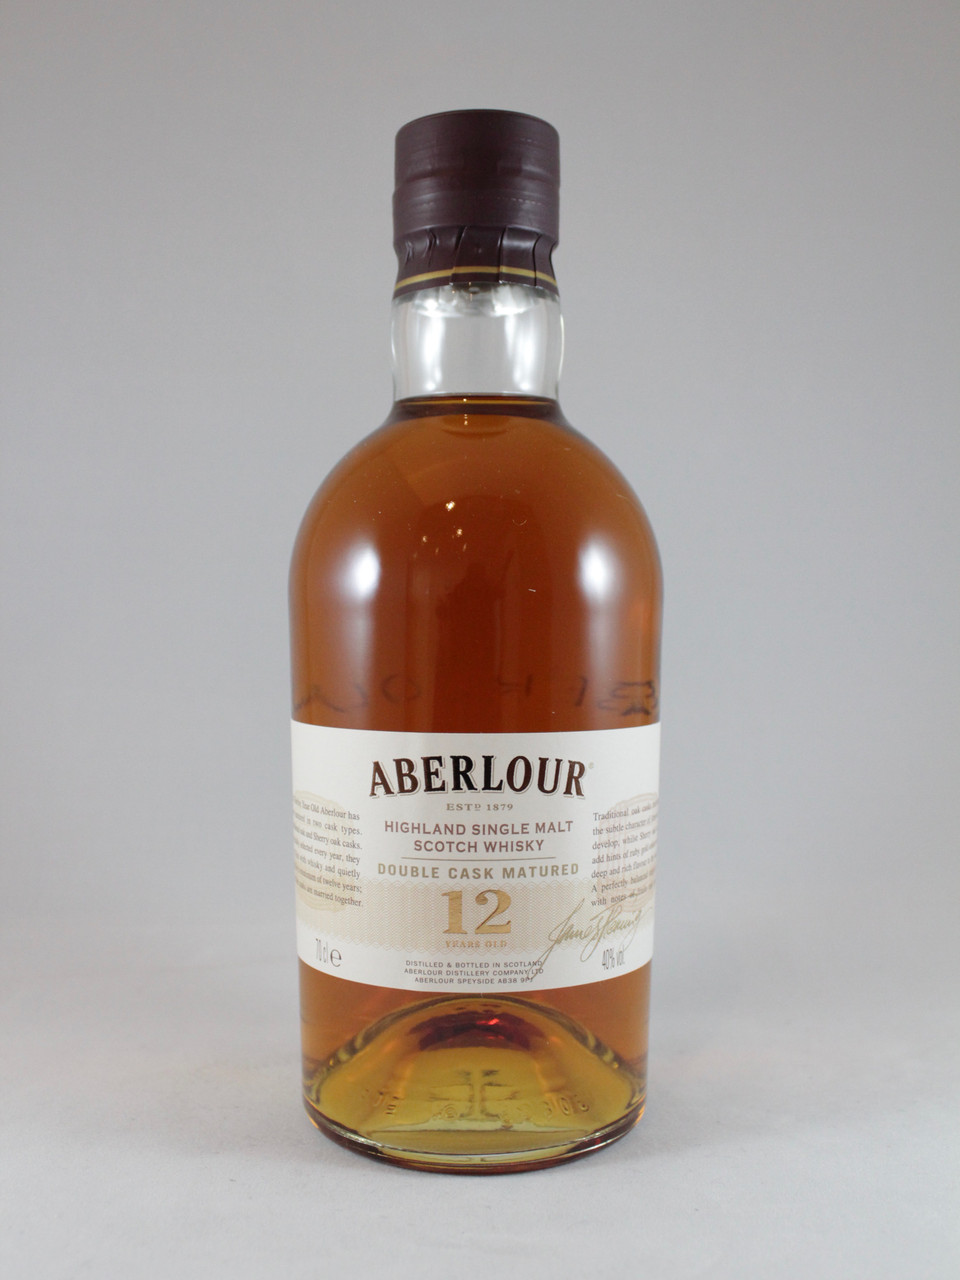 Aberlour 12 Years Old Double Cask Matured Single Malt Scotch Whisky